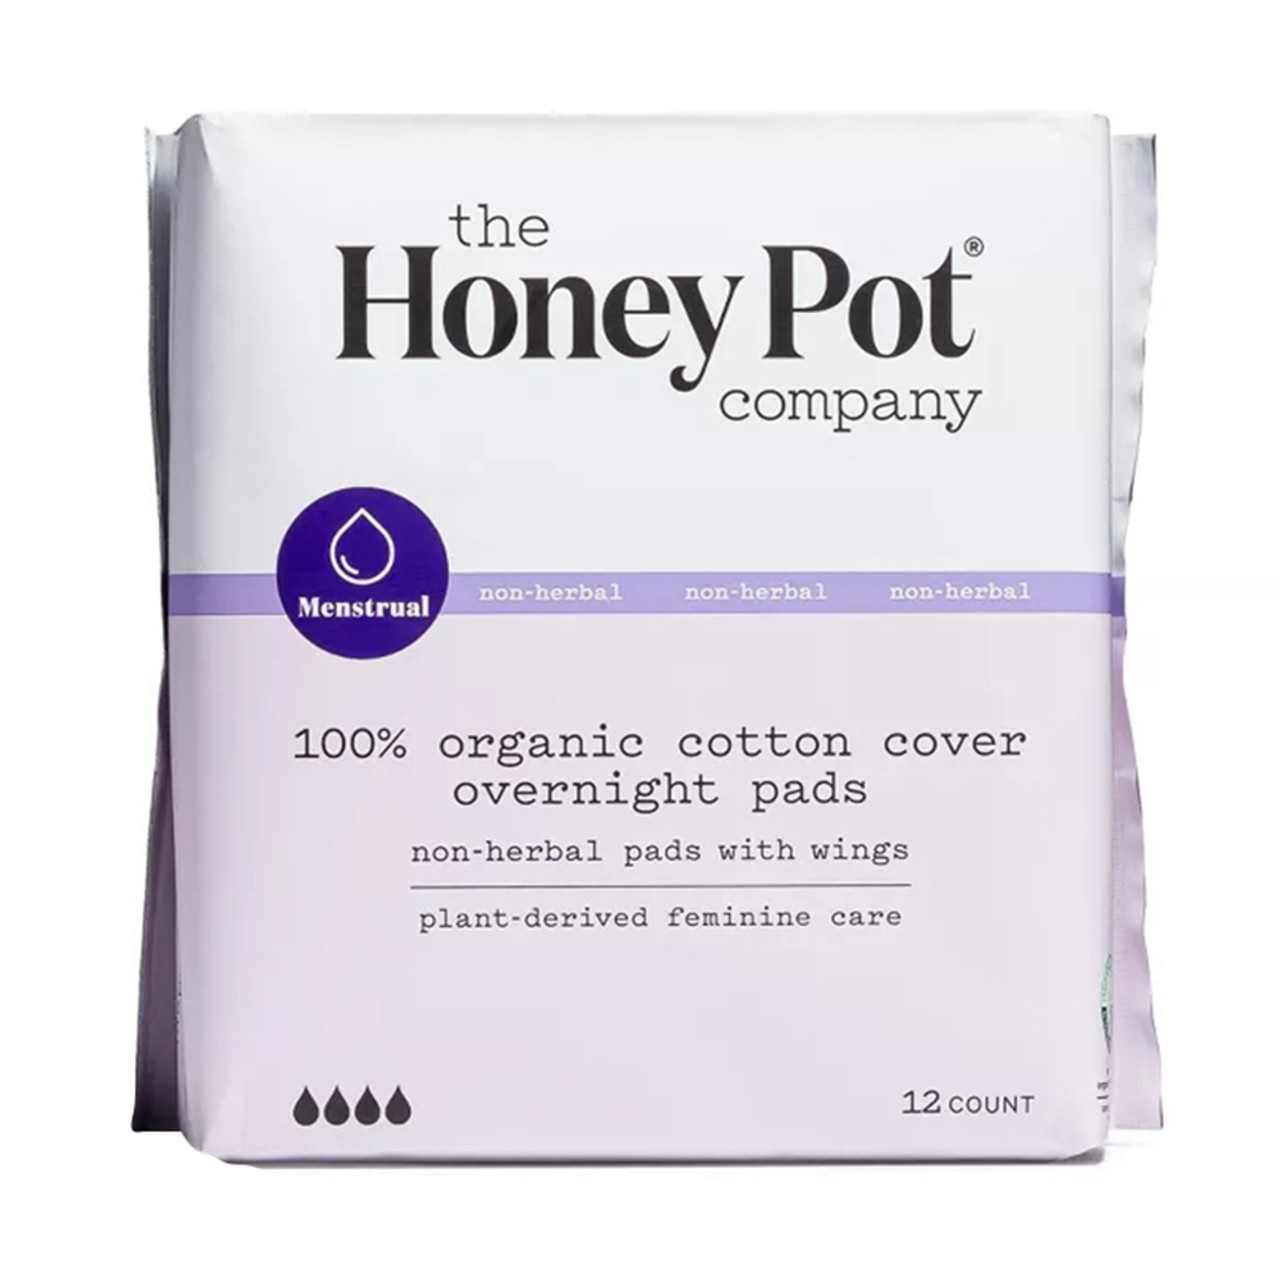 The Honey Pot Postpartum Herbal Pads